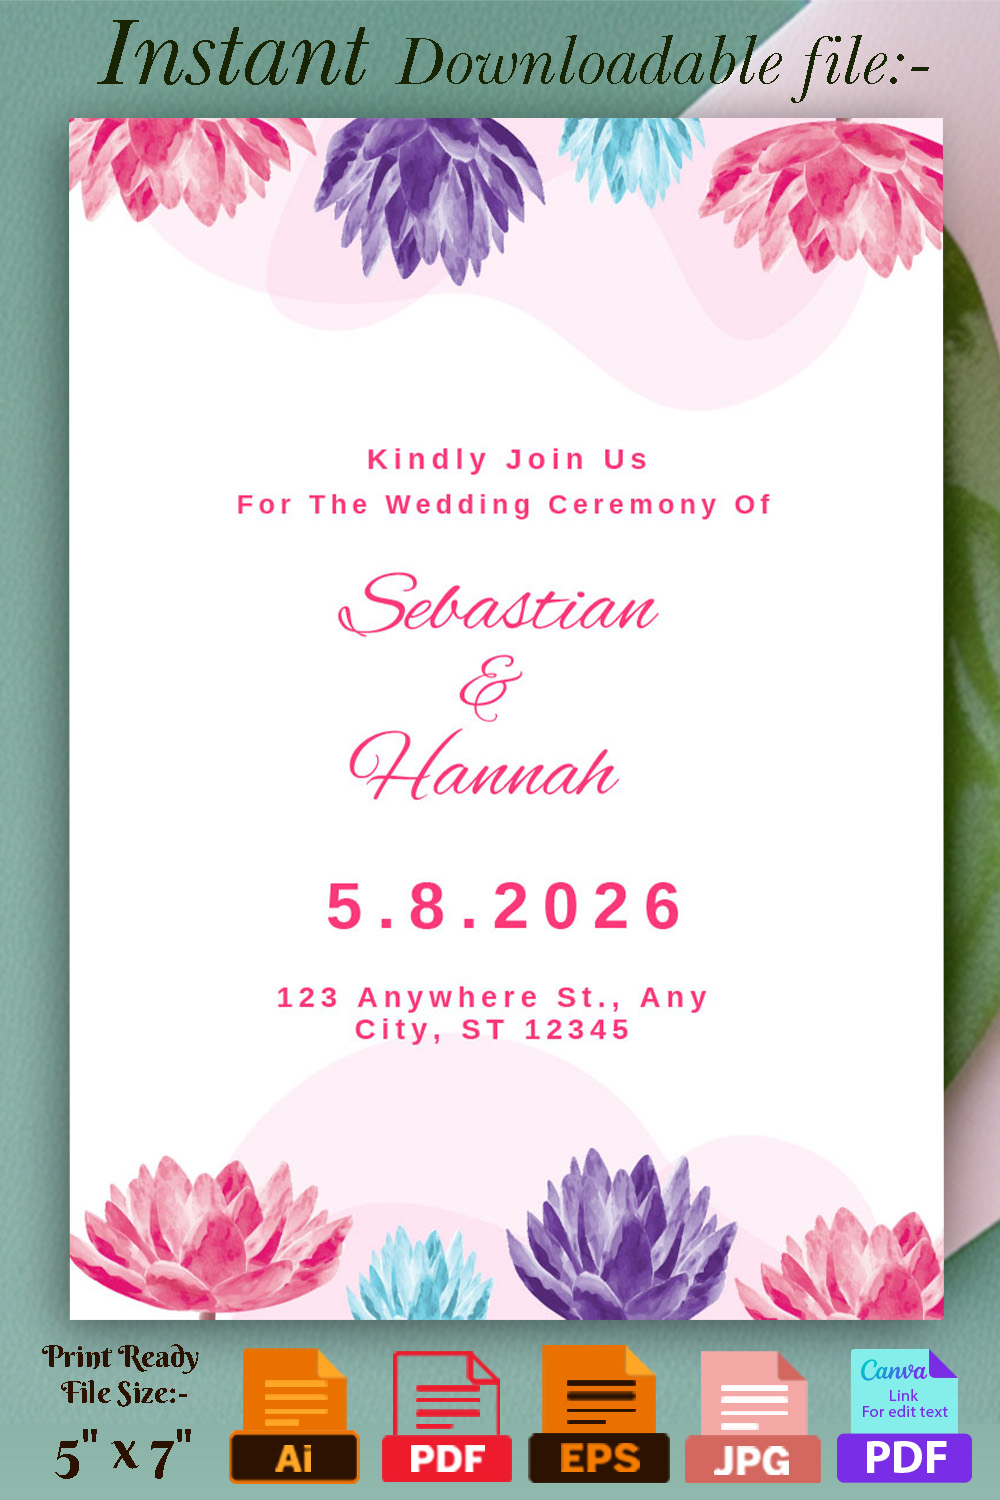 Lotuses Floral Wedding Invitation Card Template pinterest image.